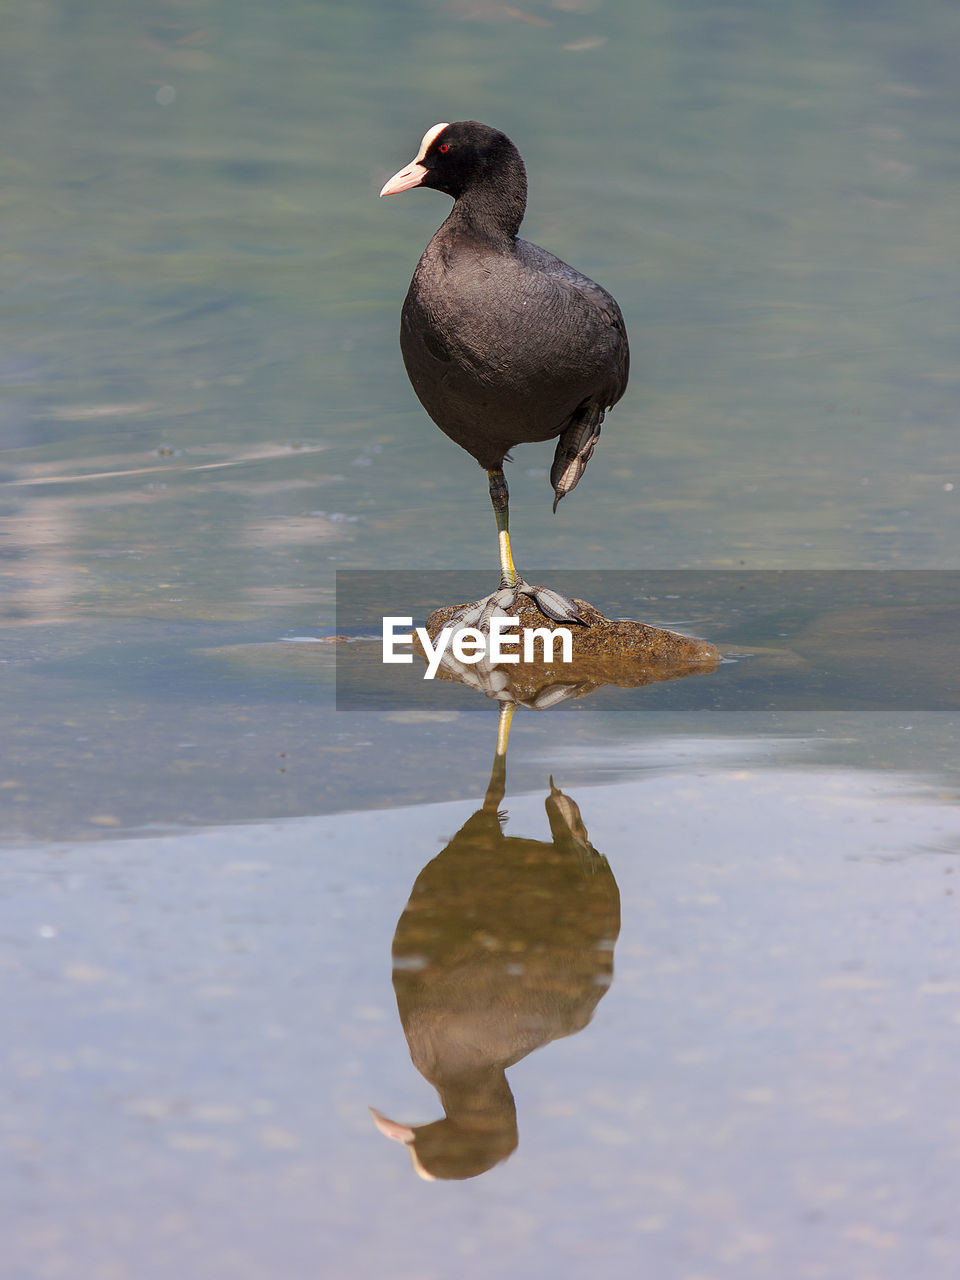 BIRD ON A LAKE